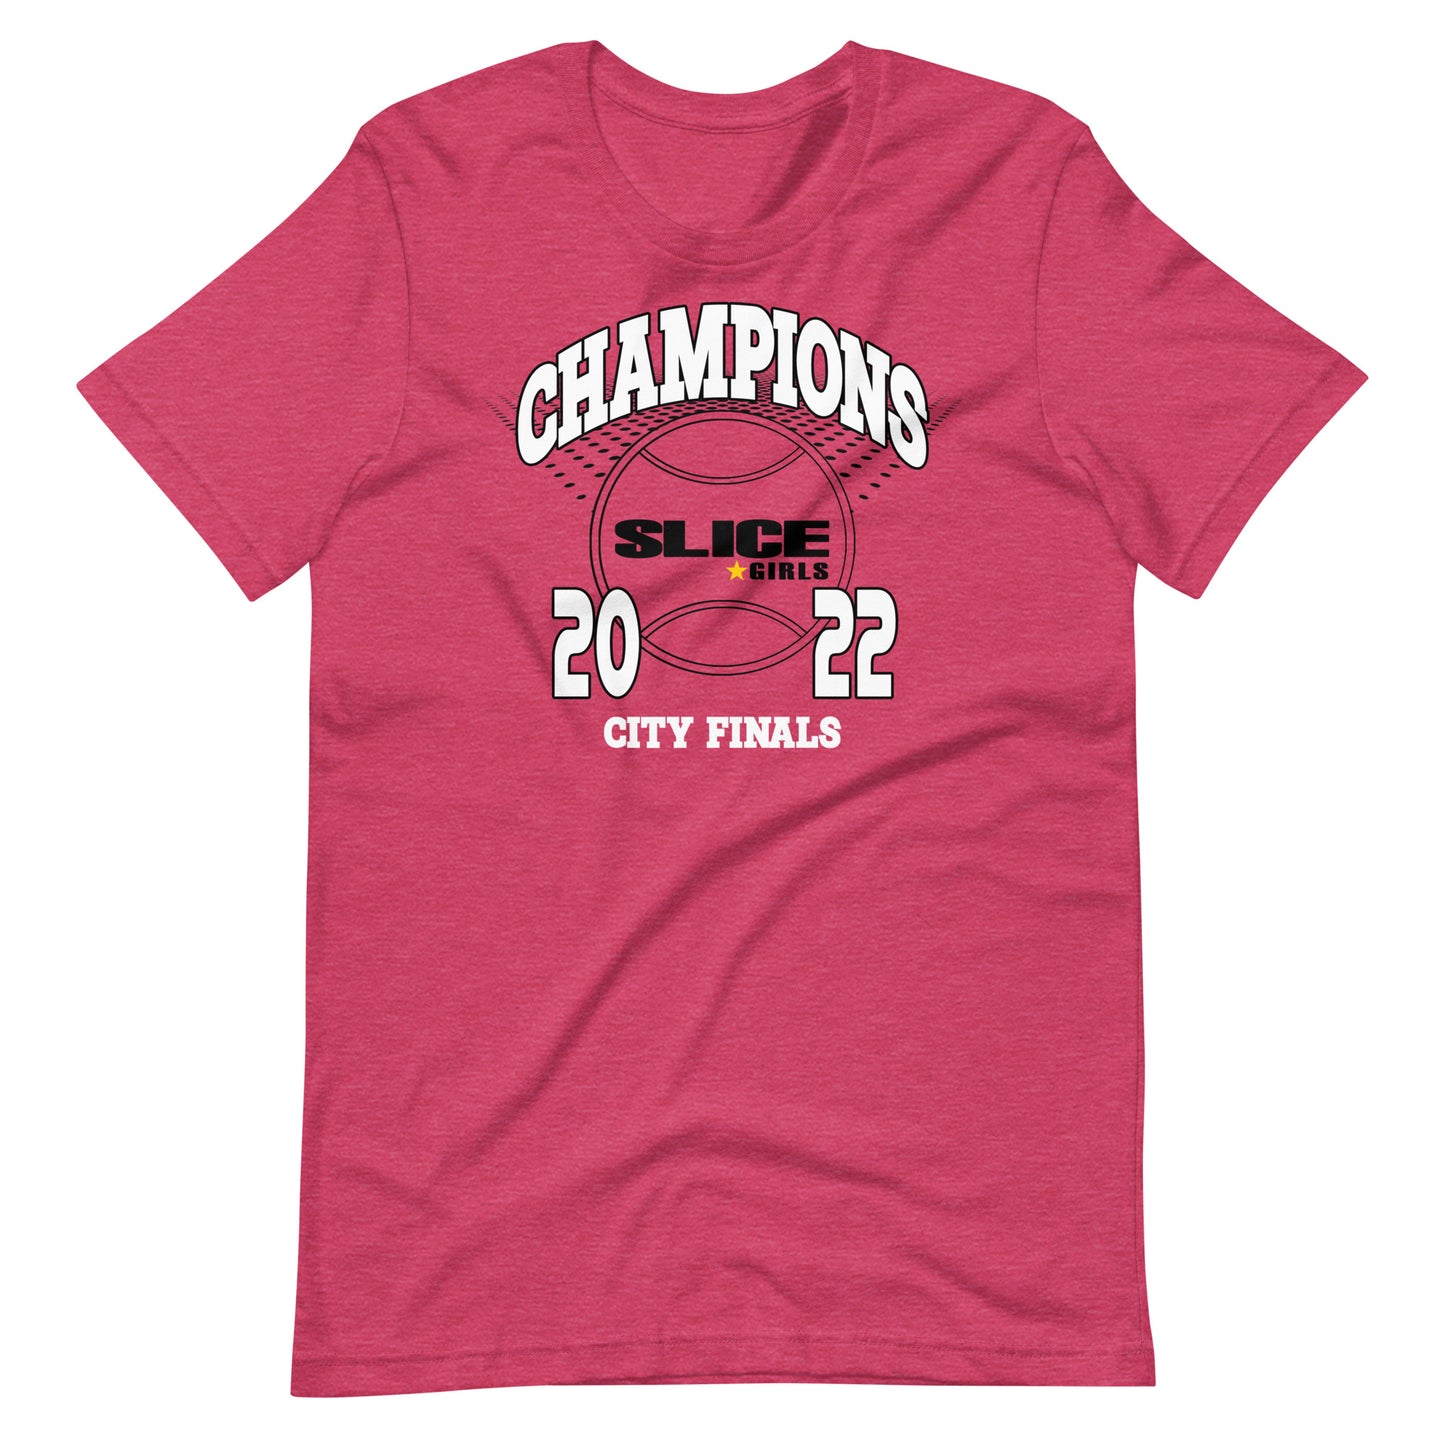 SLICE GIRLS tennis team city finals championship shirt